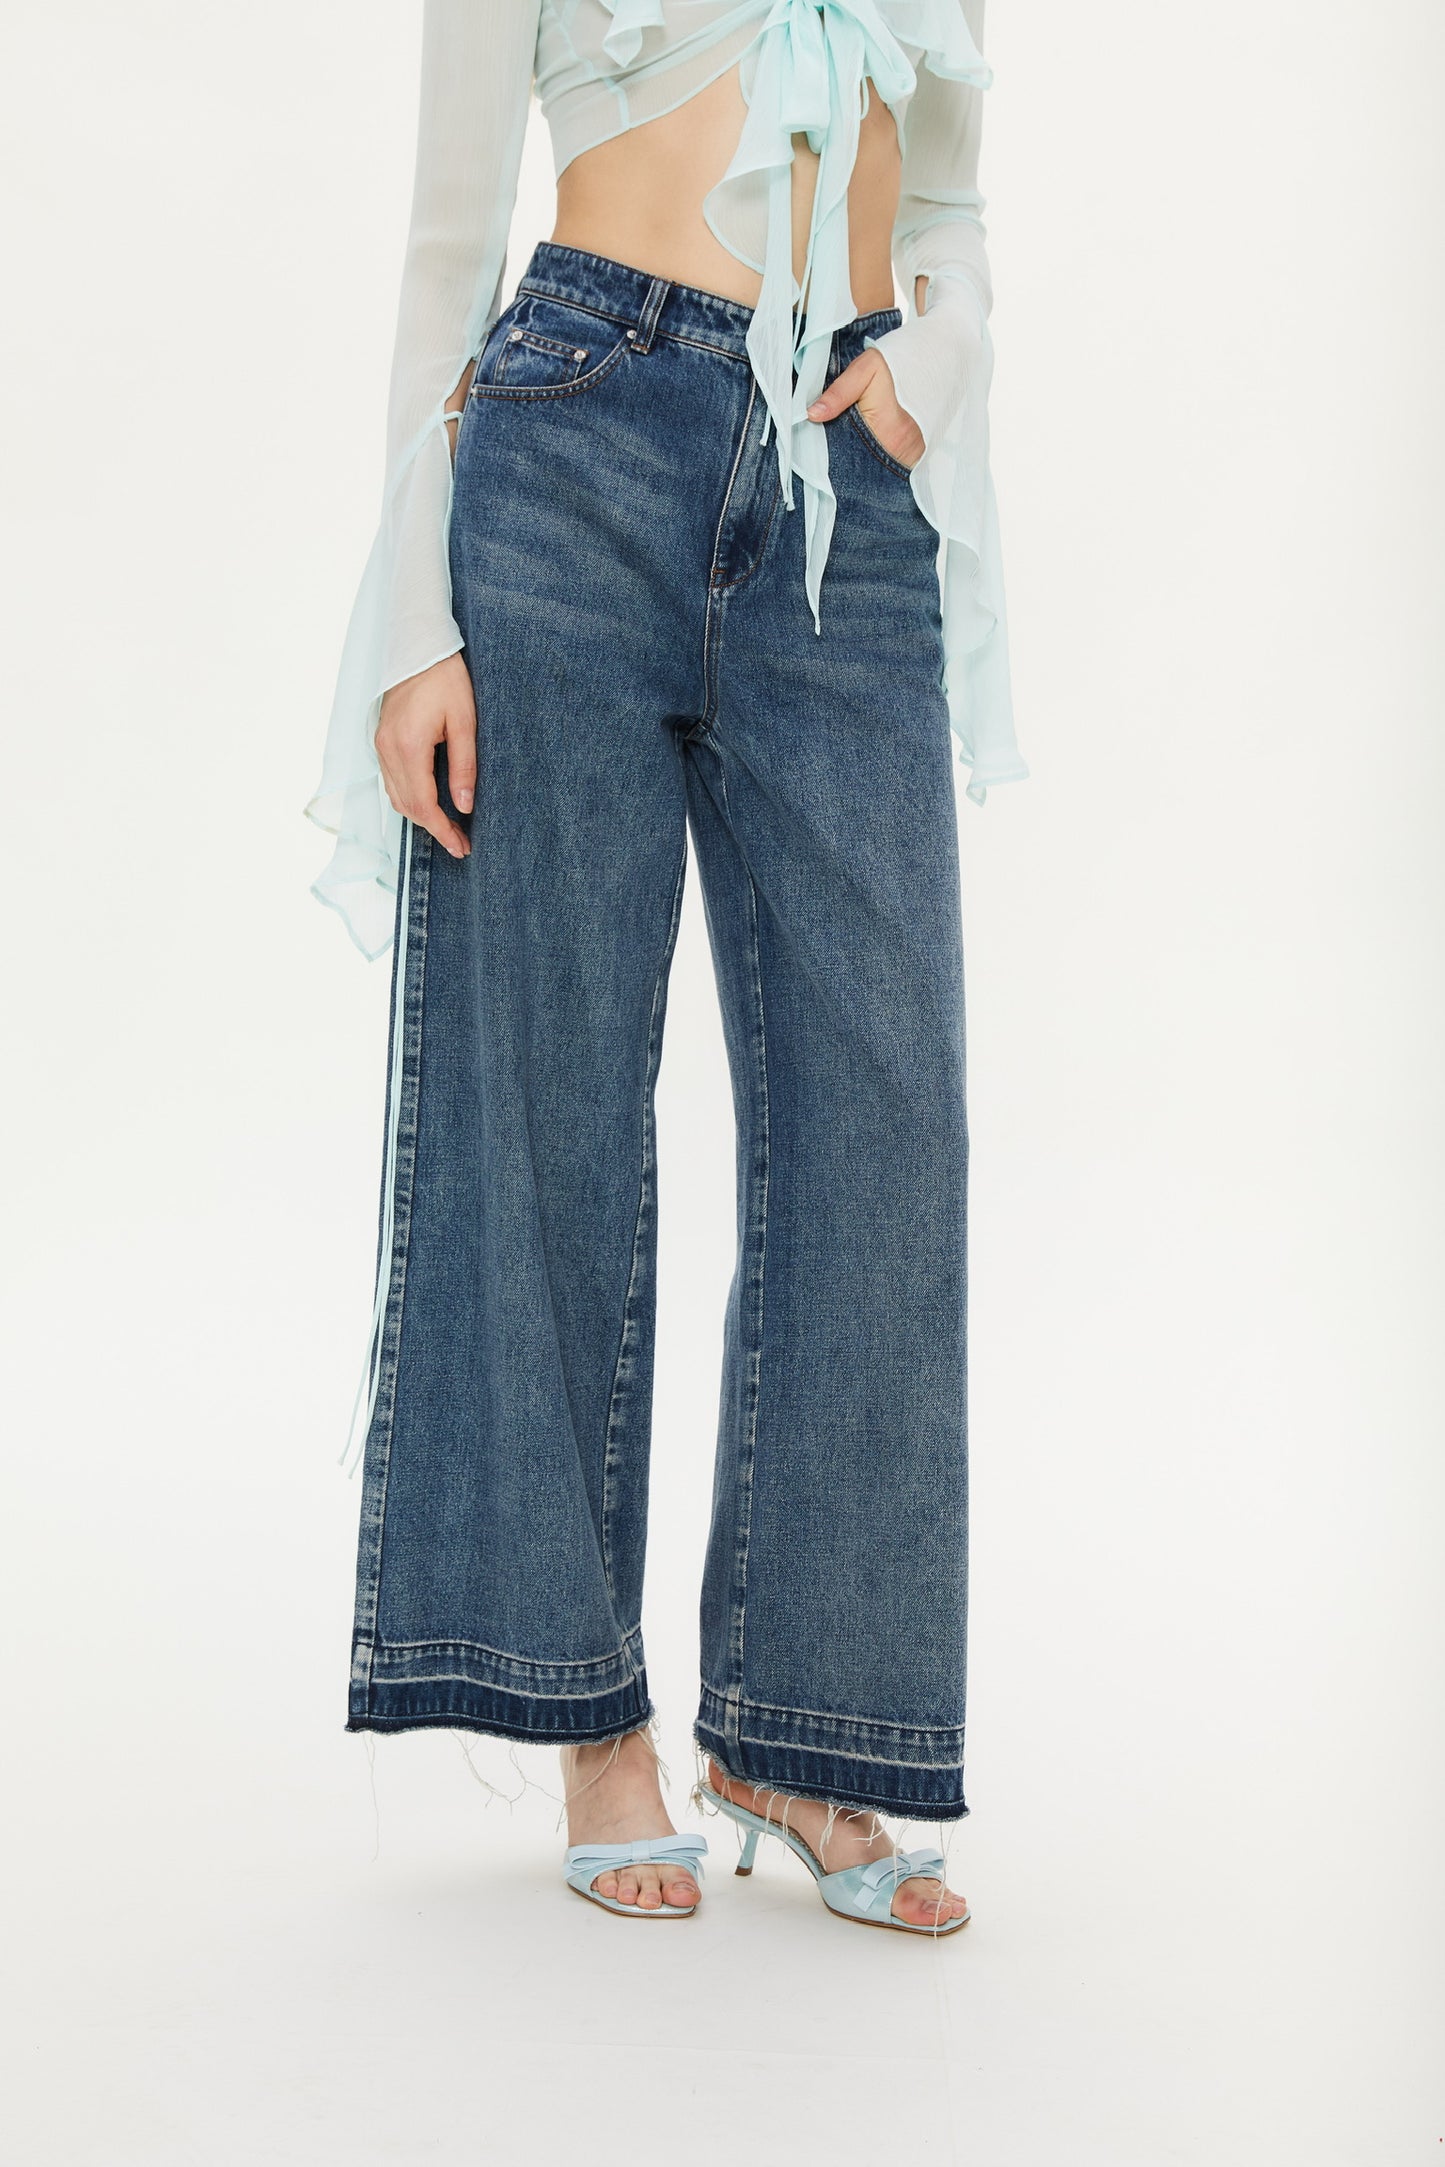 Fiona frayed jeans